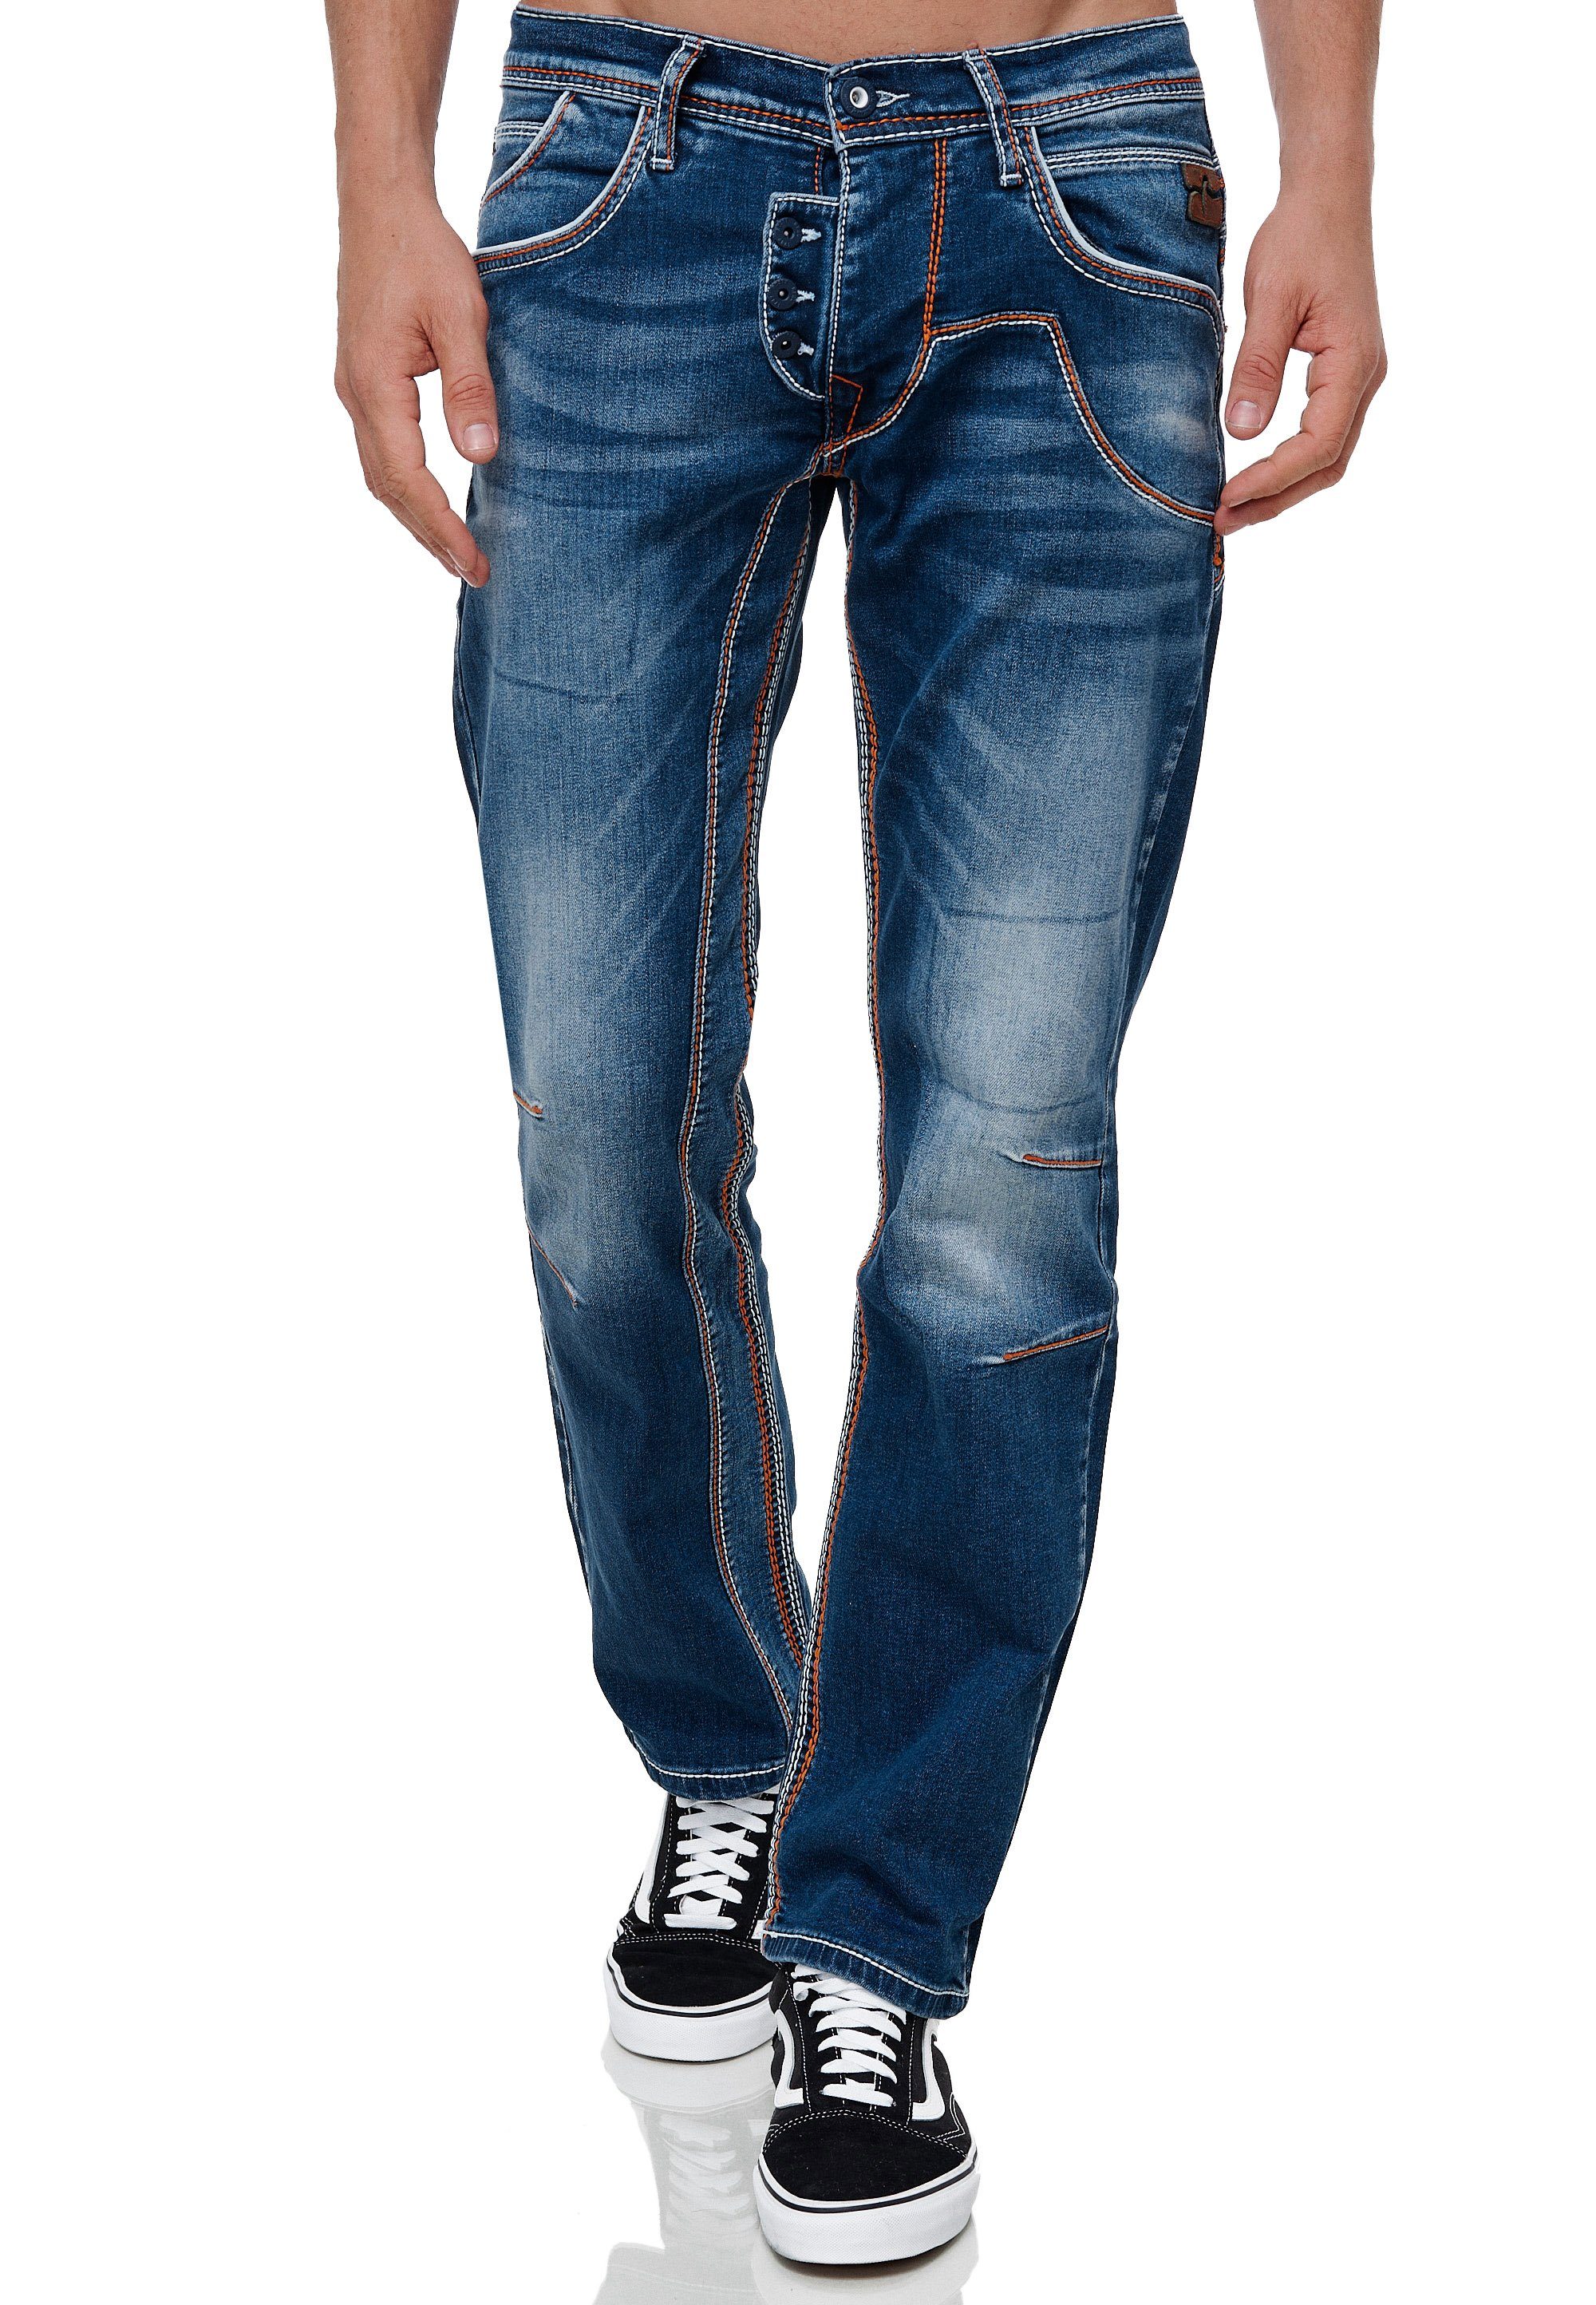 Rusty Neal Straight-Jeans RUBEN 43 mit auffälligen Ziernähten | Straight-Fit Jeans